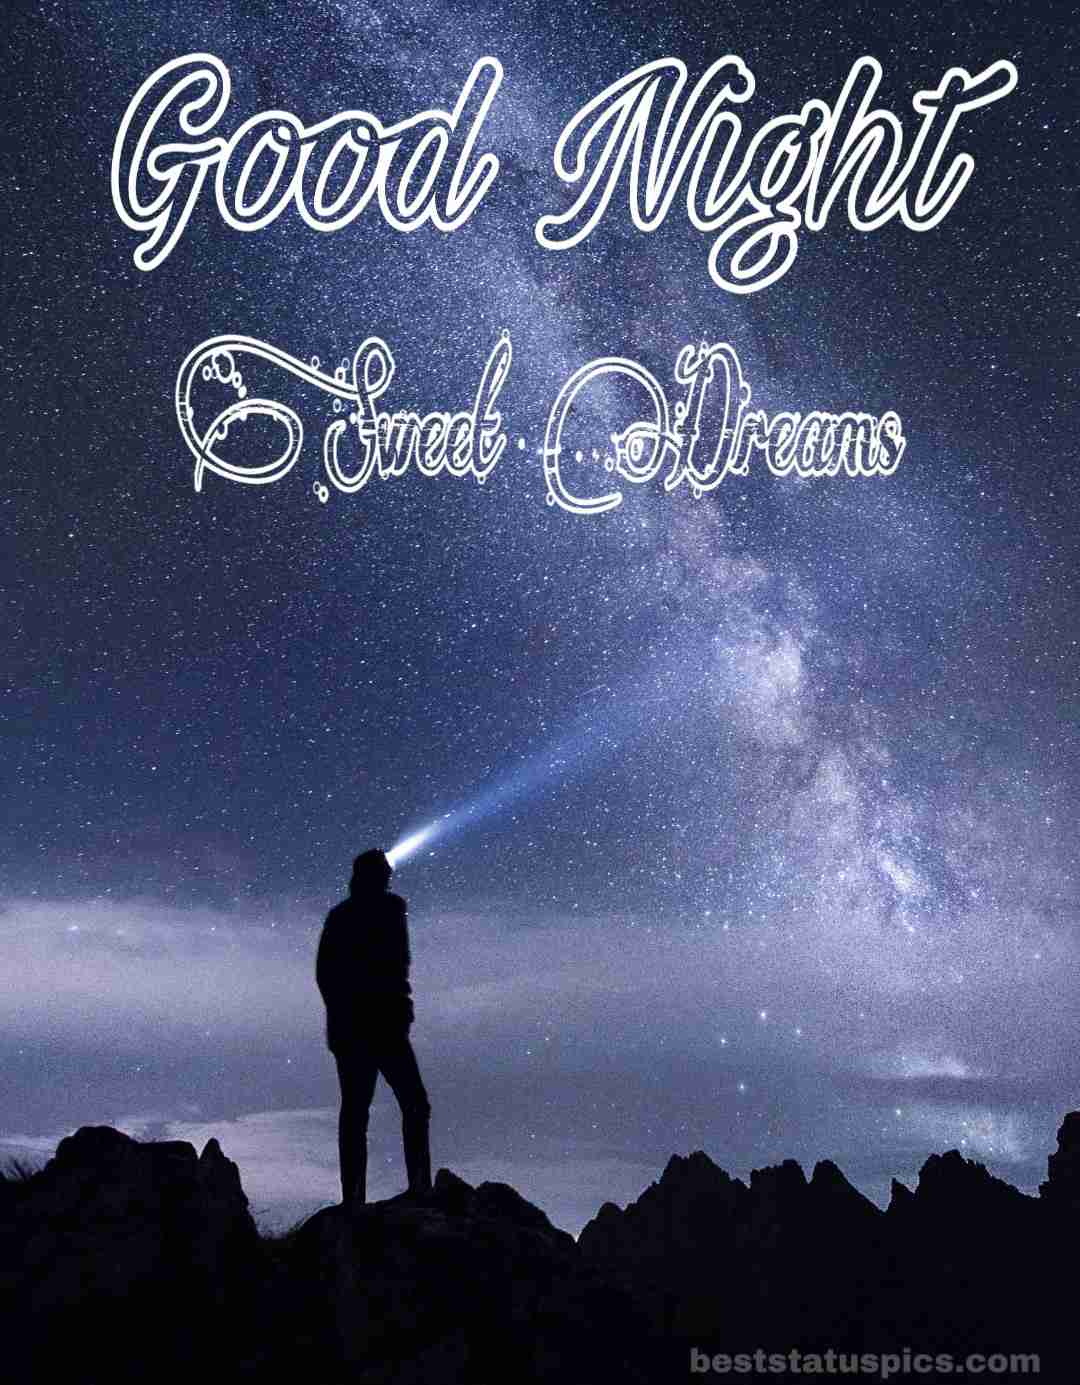 299+ Good Night Sweet Dreams Nature Images HD [2021] | Best Status Pics